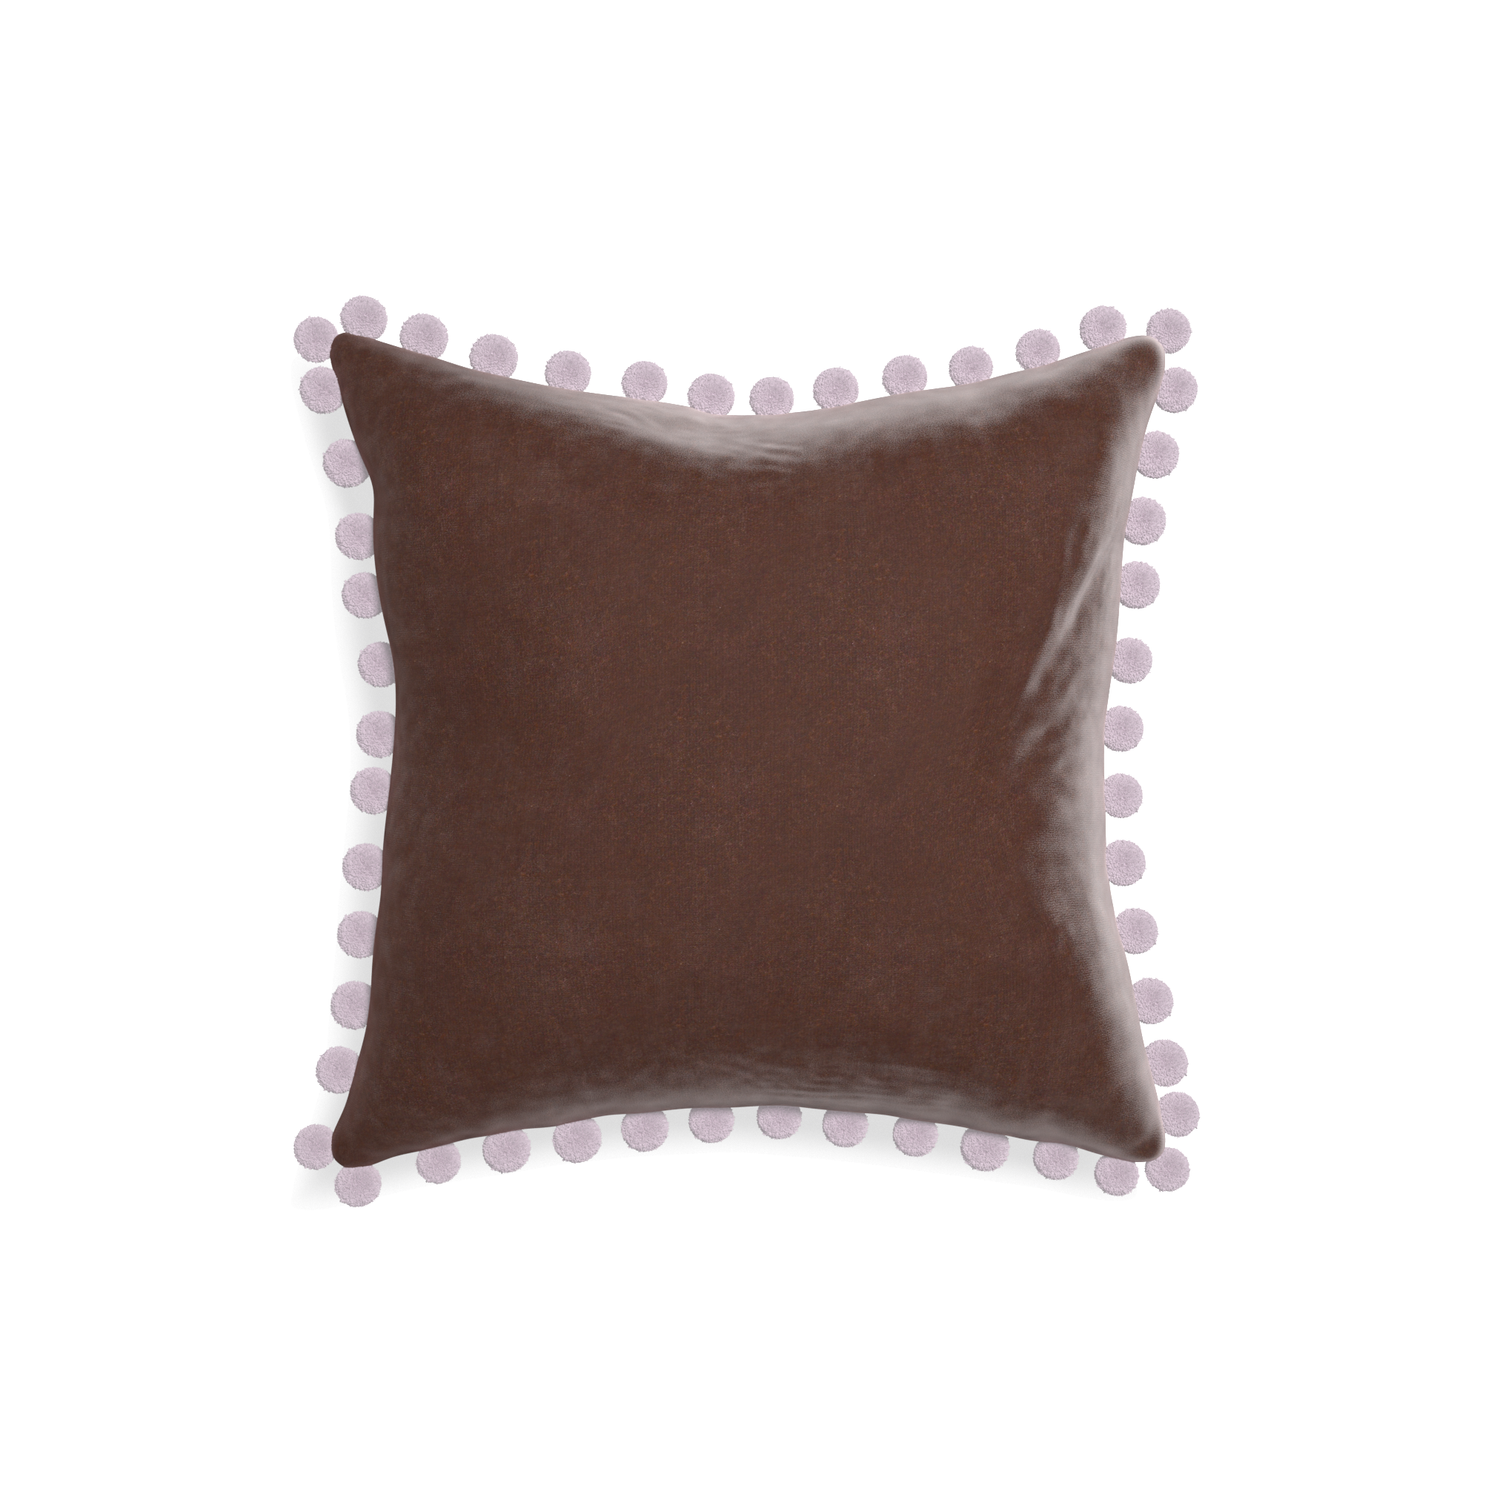 square brown velvet pillow with lilac pom poms